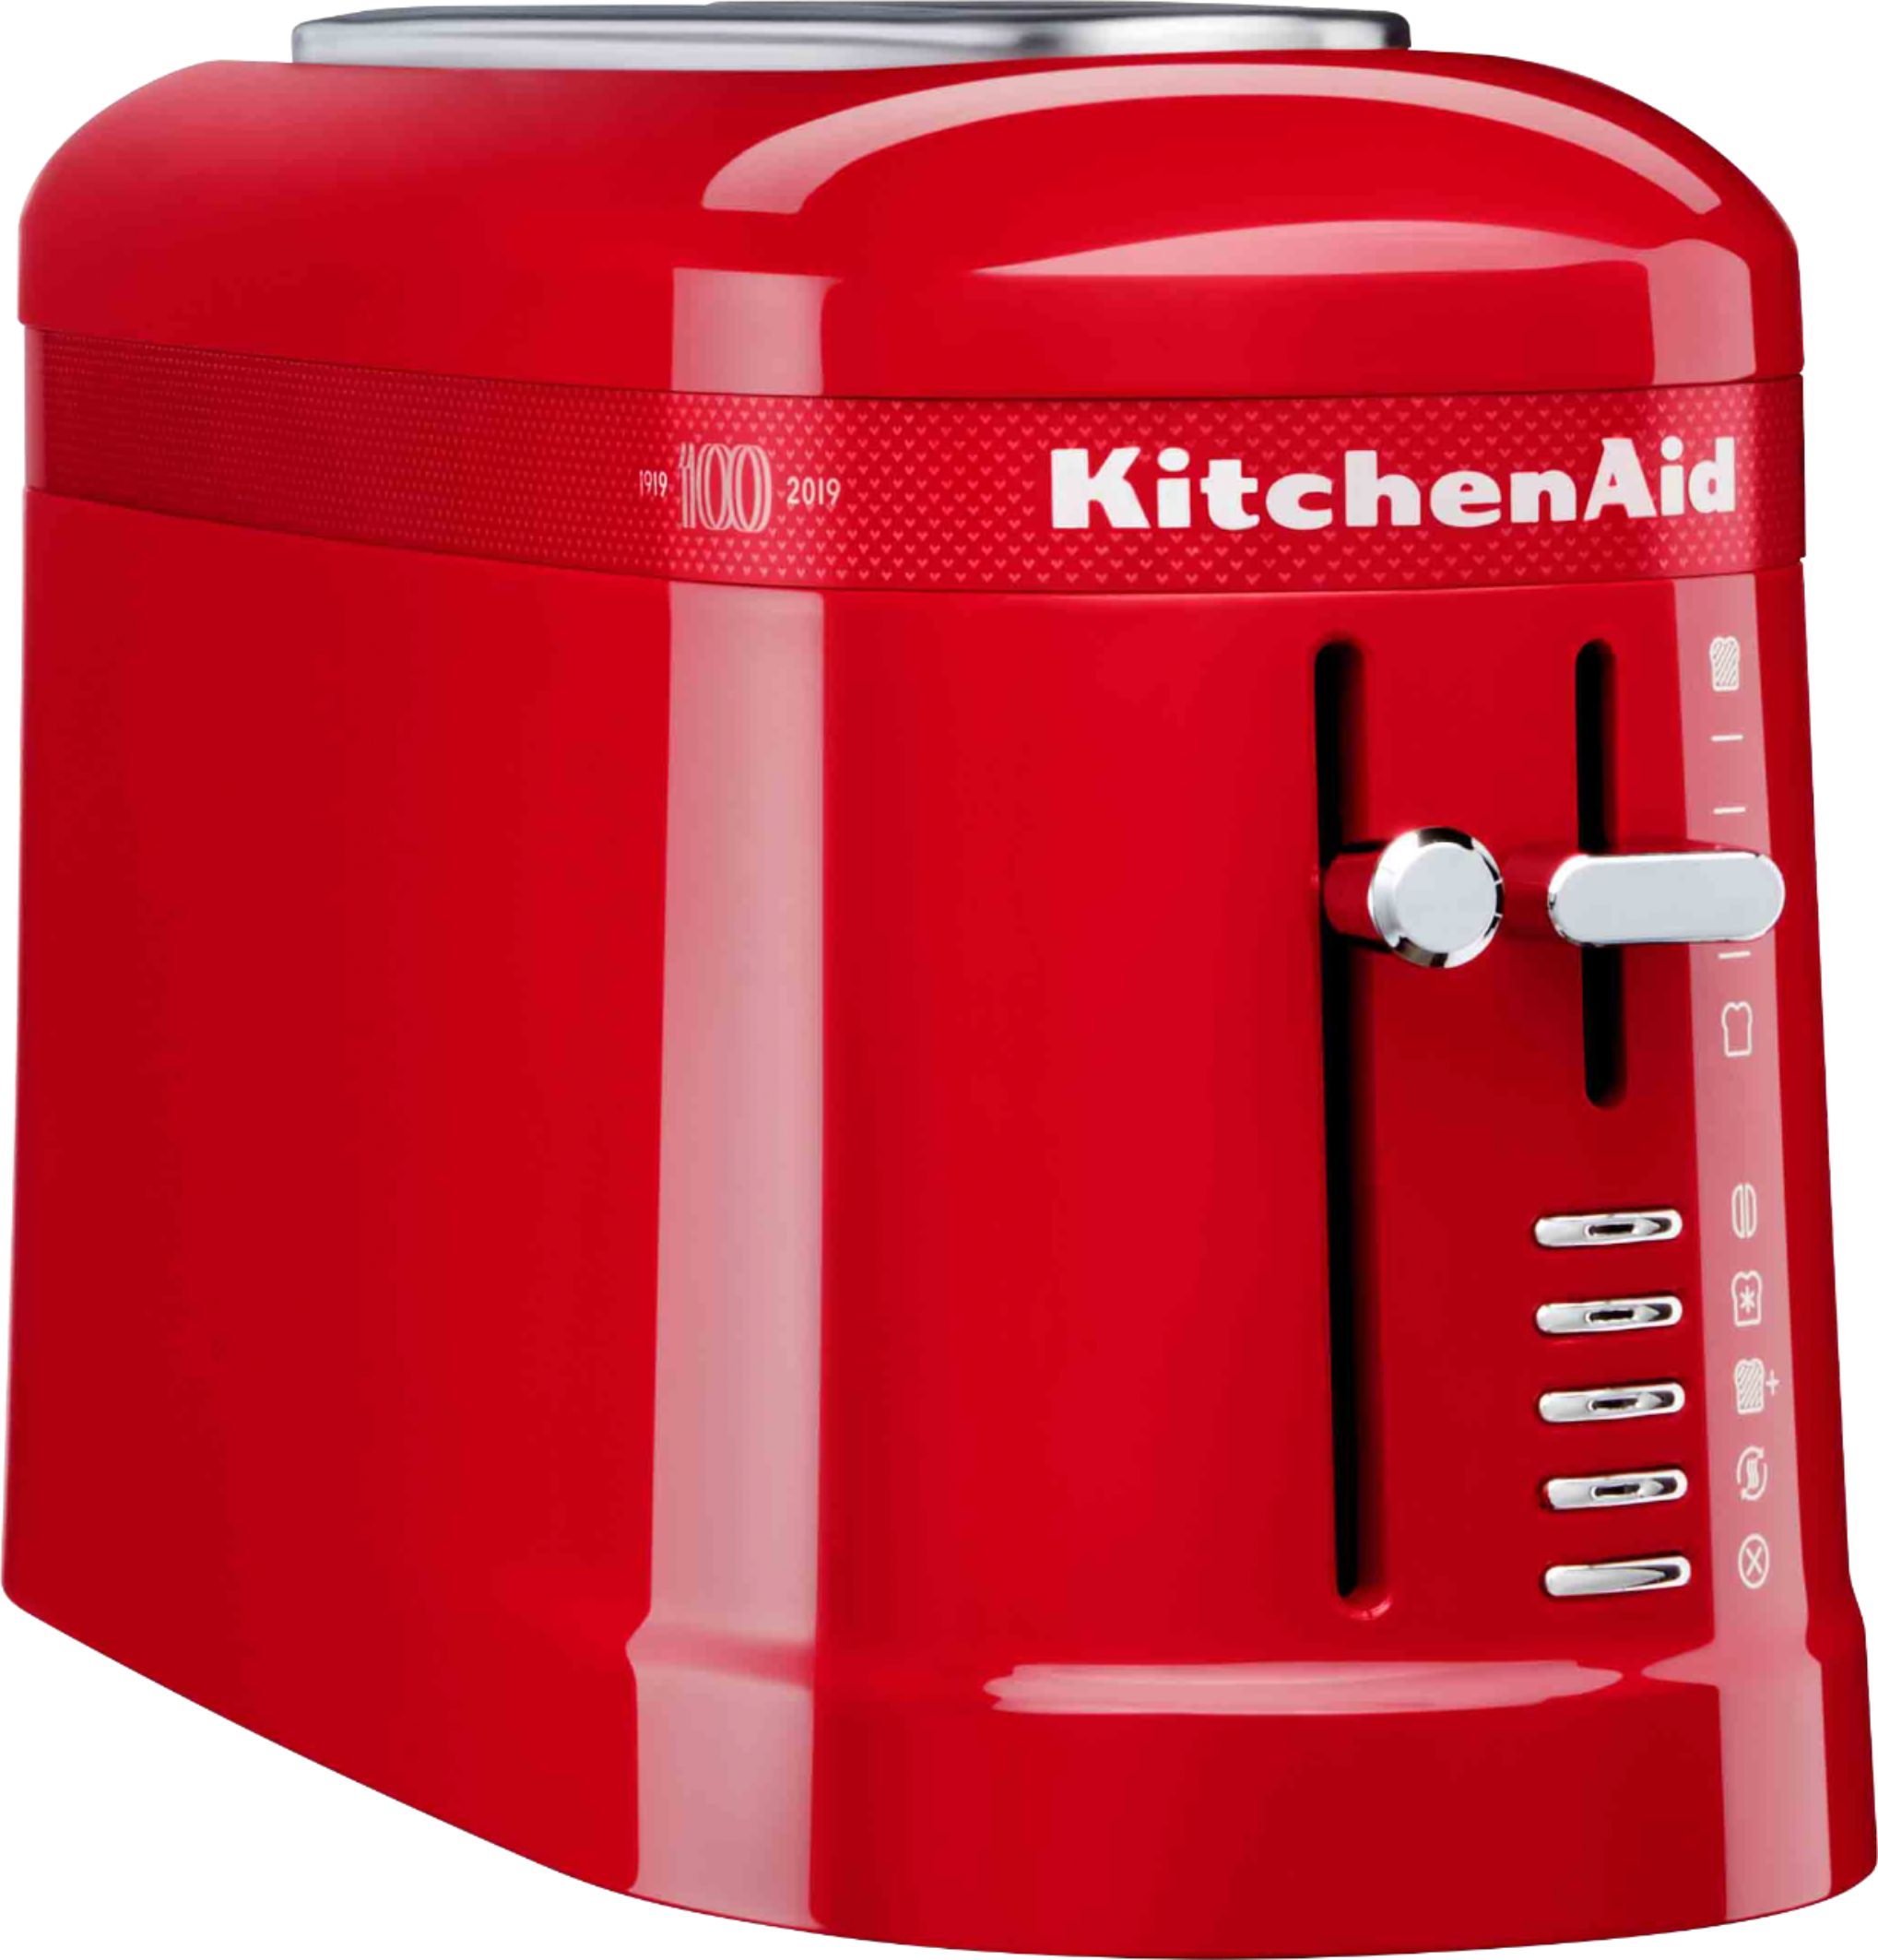 KitchenAid KMT3115ER 2 Slice Long Slot 2 Slice Toaster, Empire Red